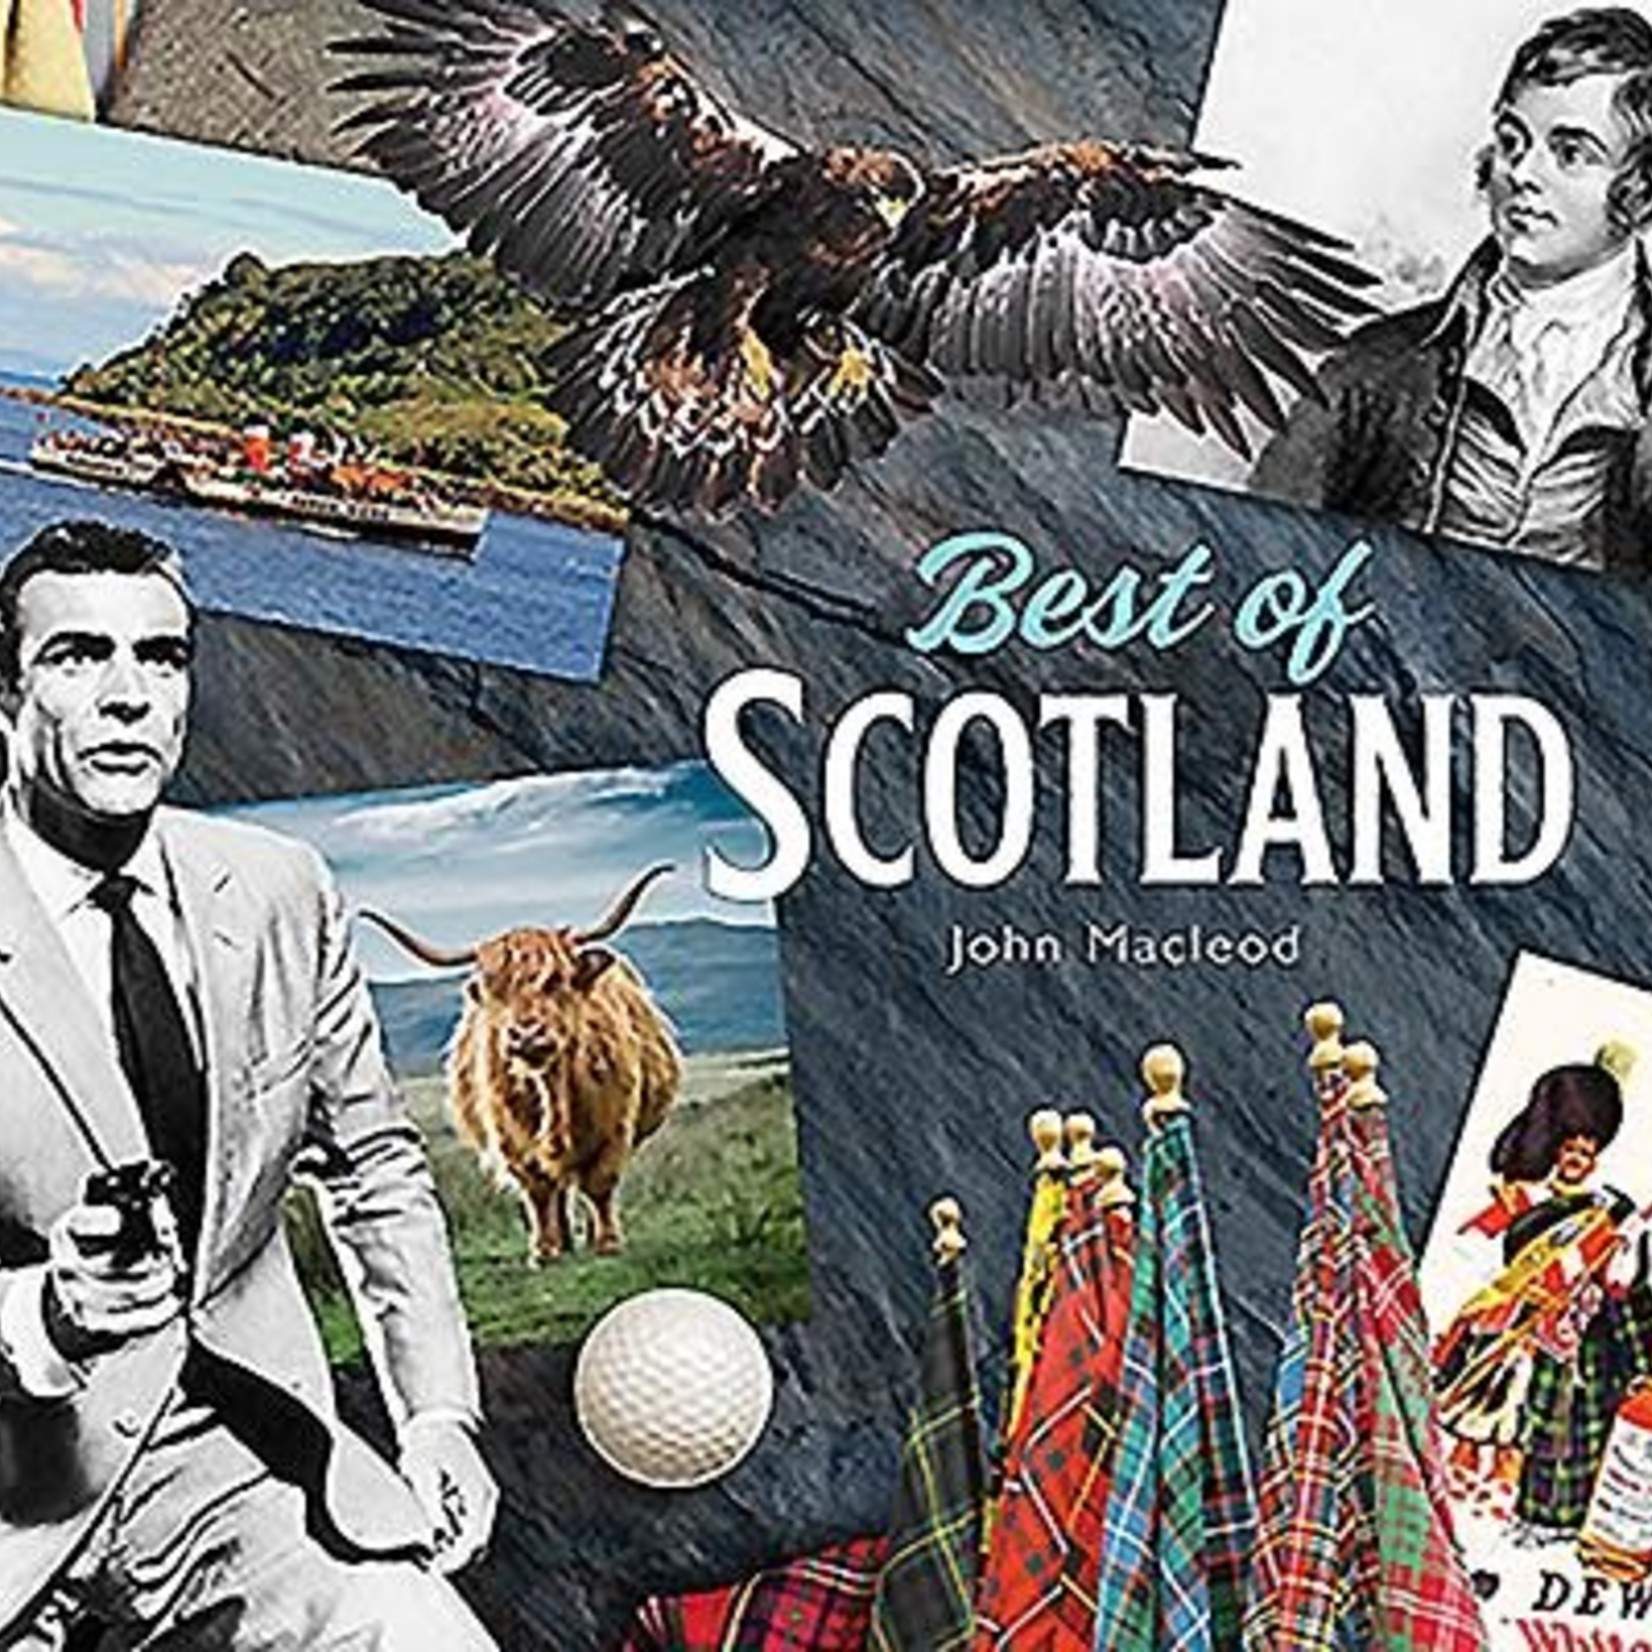 Celtic Books "Best of Scotland"